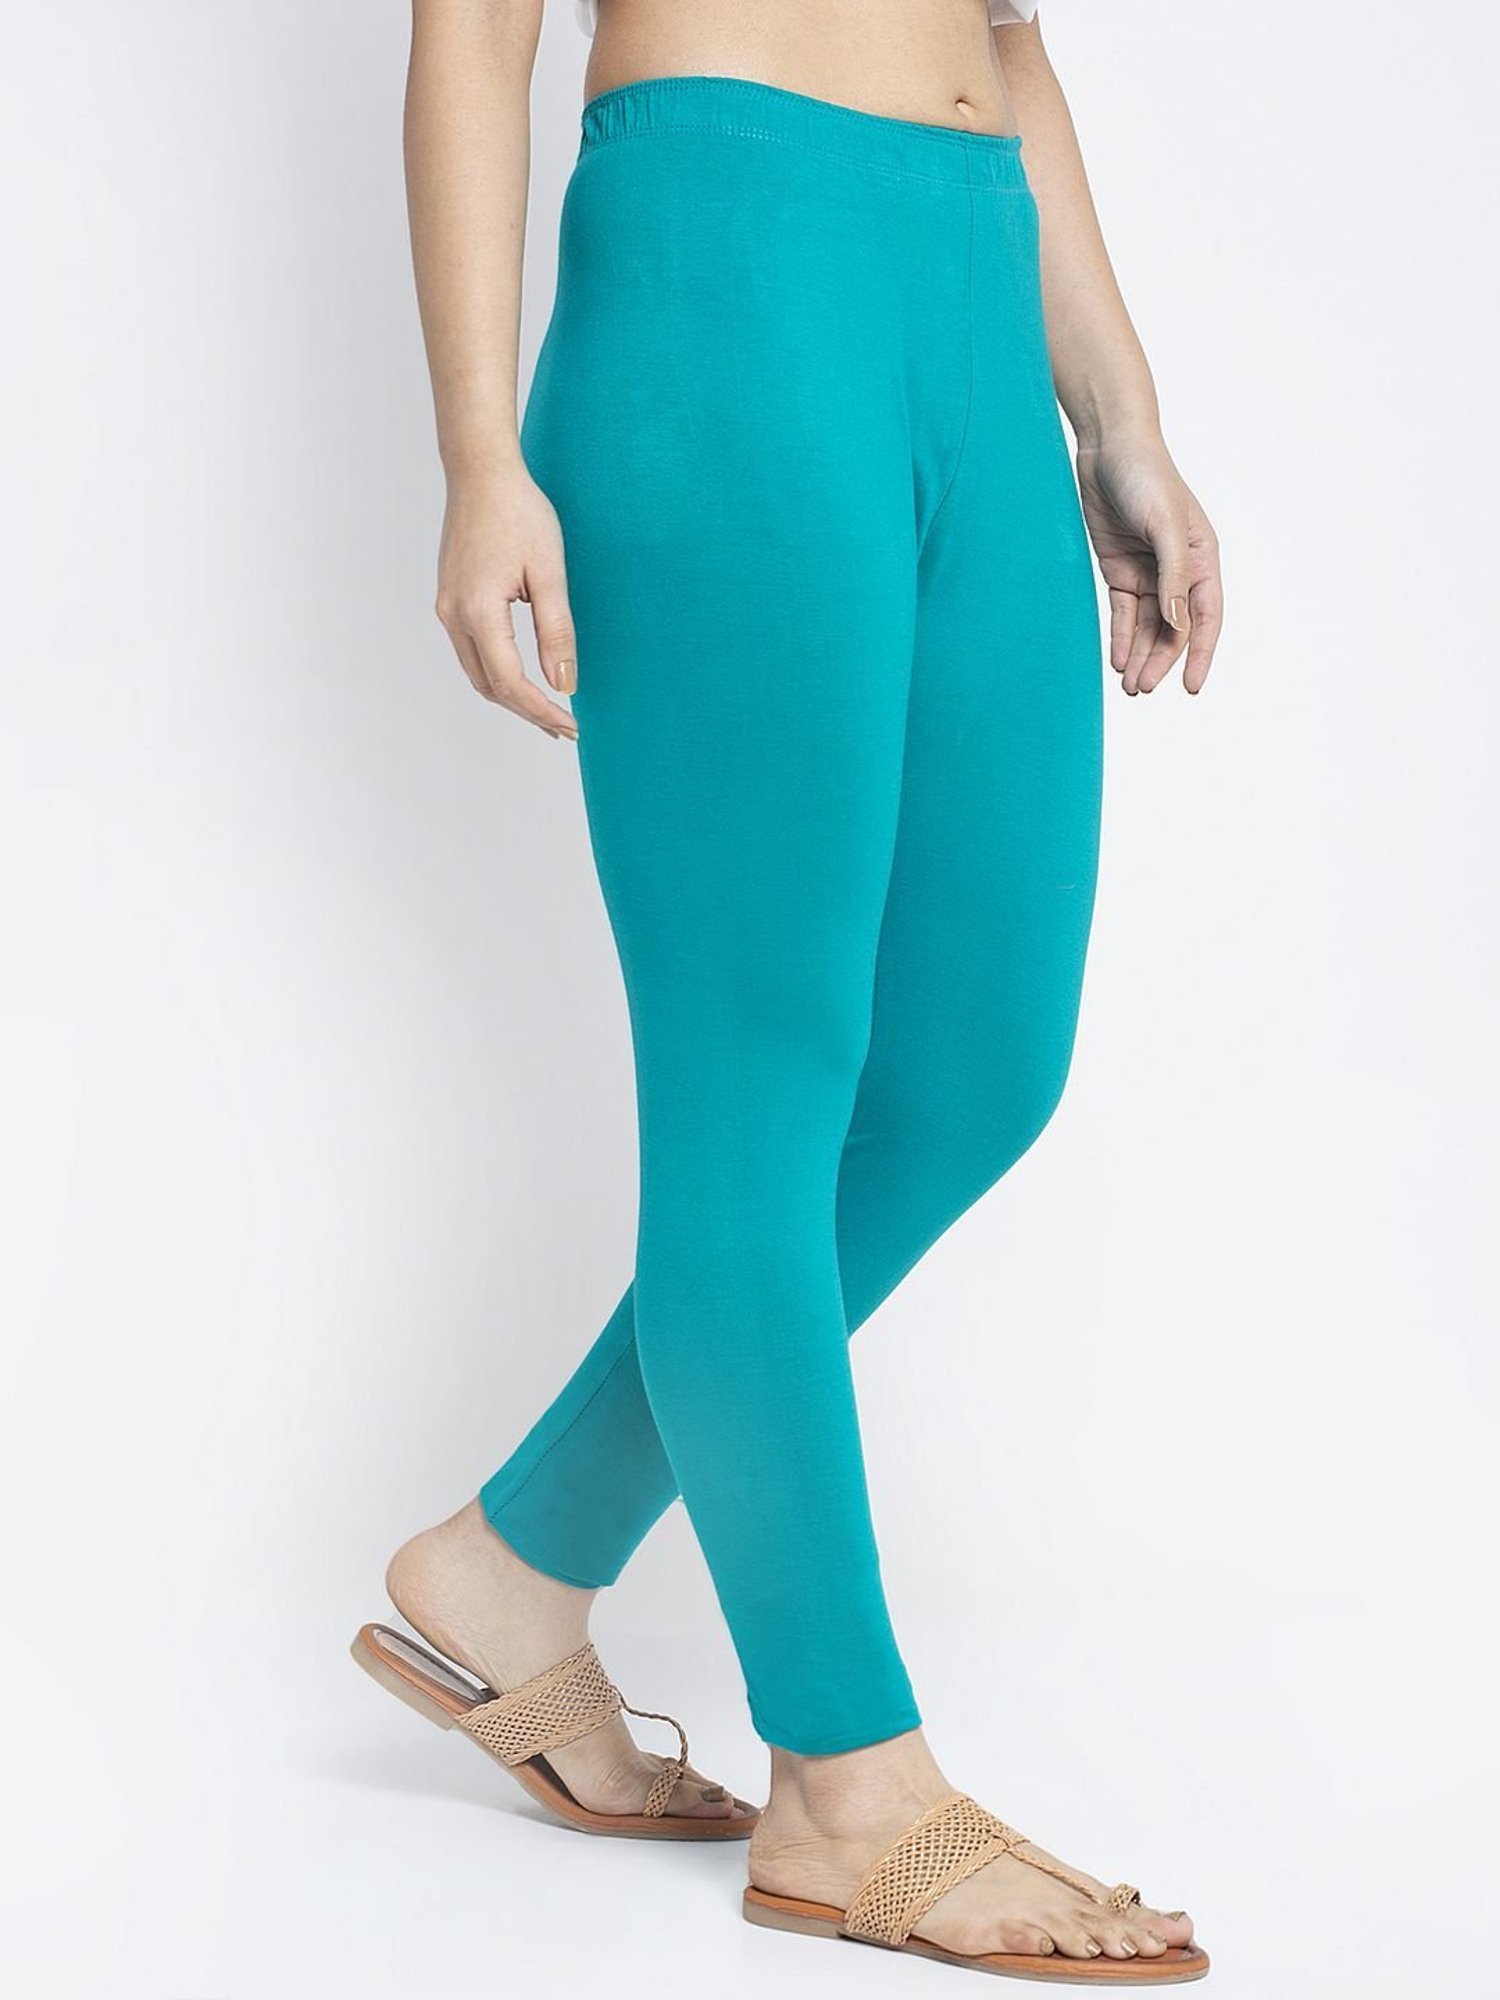 Buy Baano Churidar Ethnic Wear Legging Cotton for Women (Turquoise Blue,  Medium) at Amazon.in